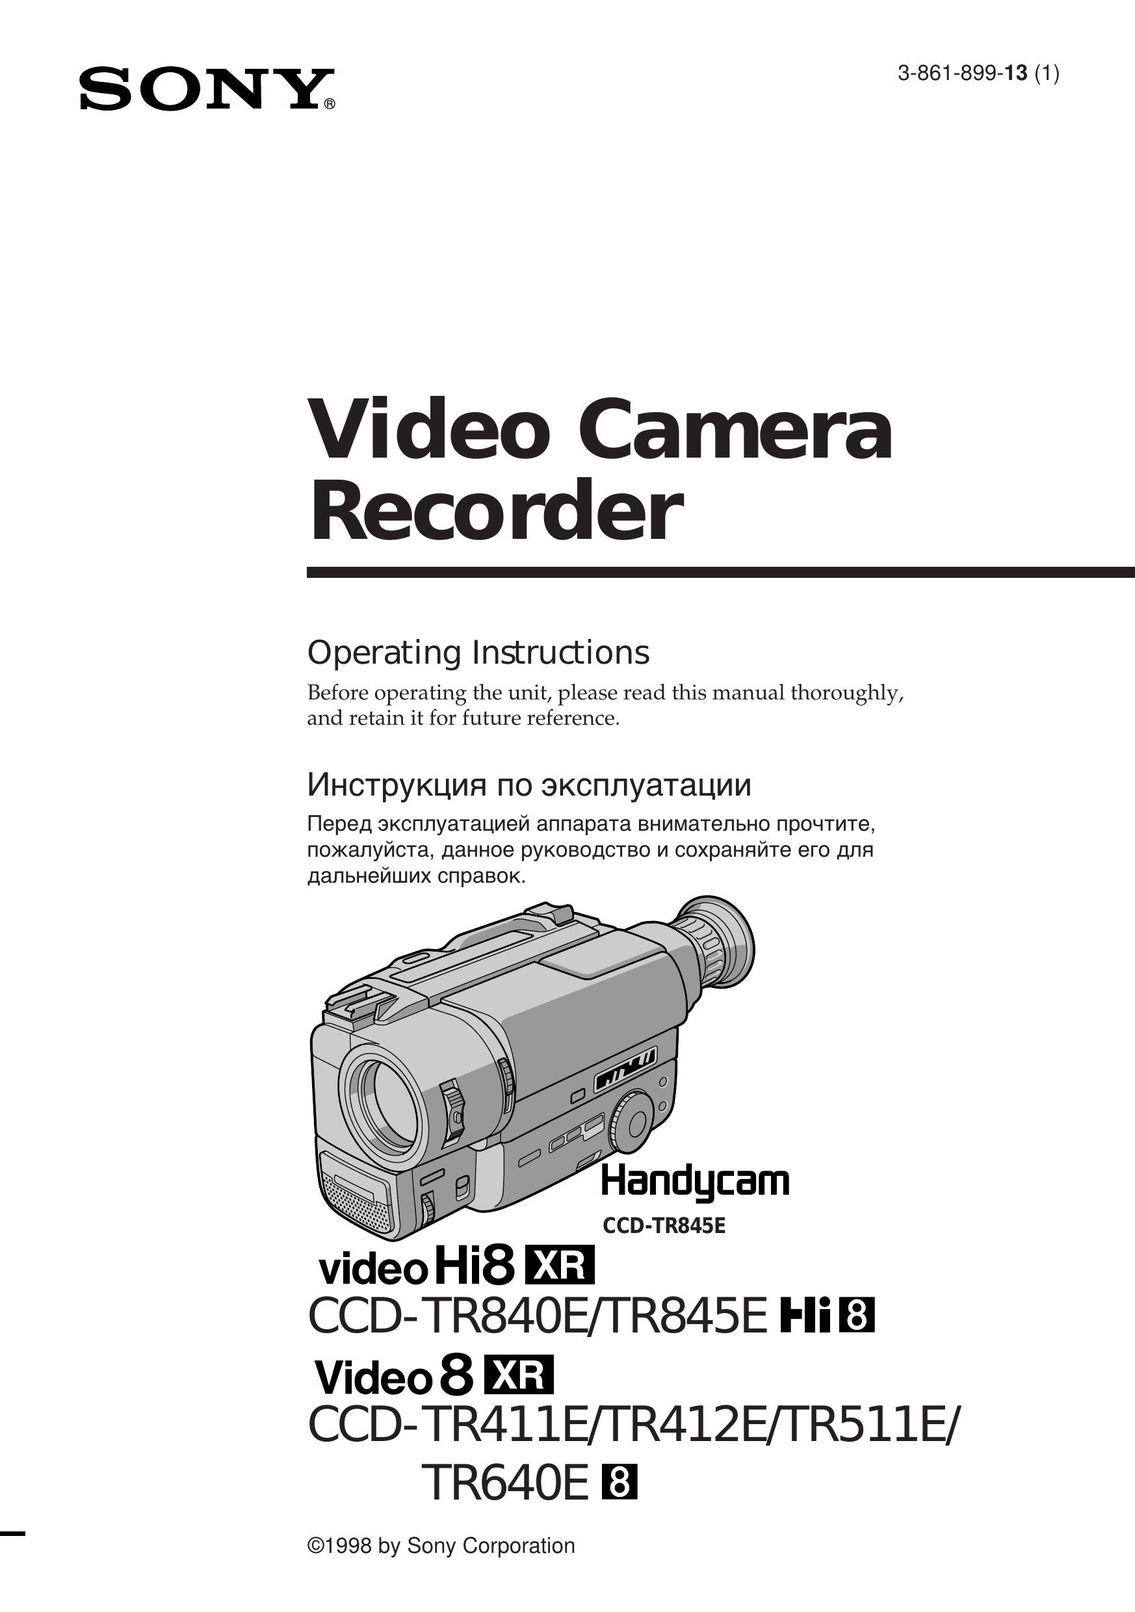 Sony CCD-TR511E VCR User Manual